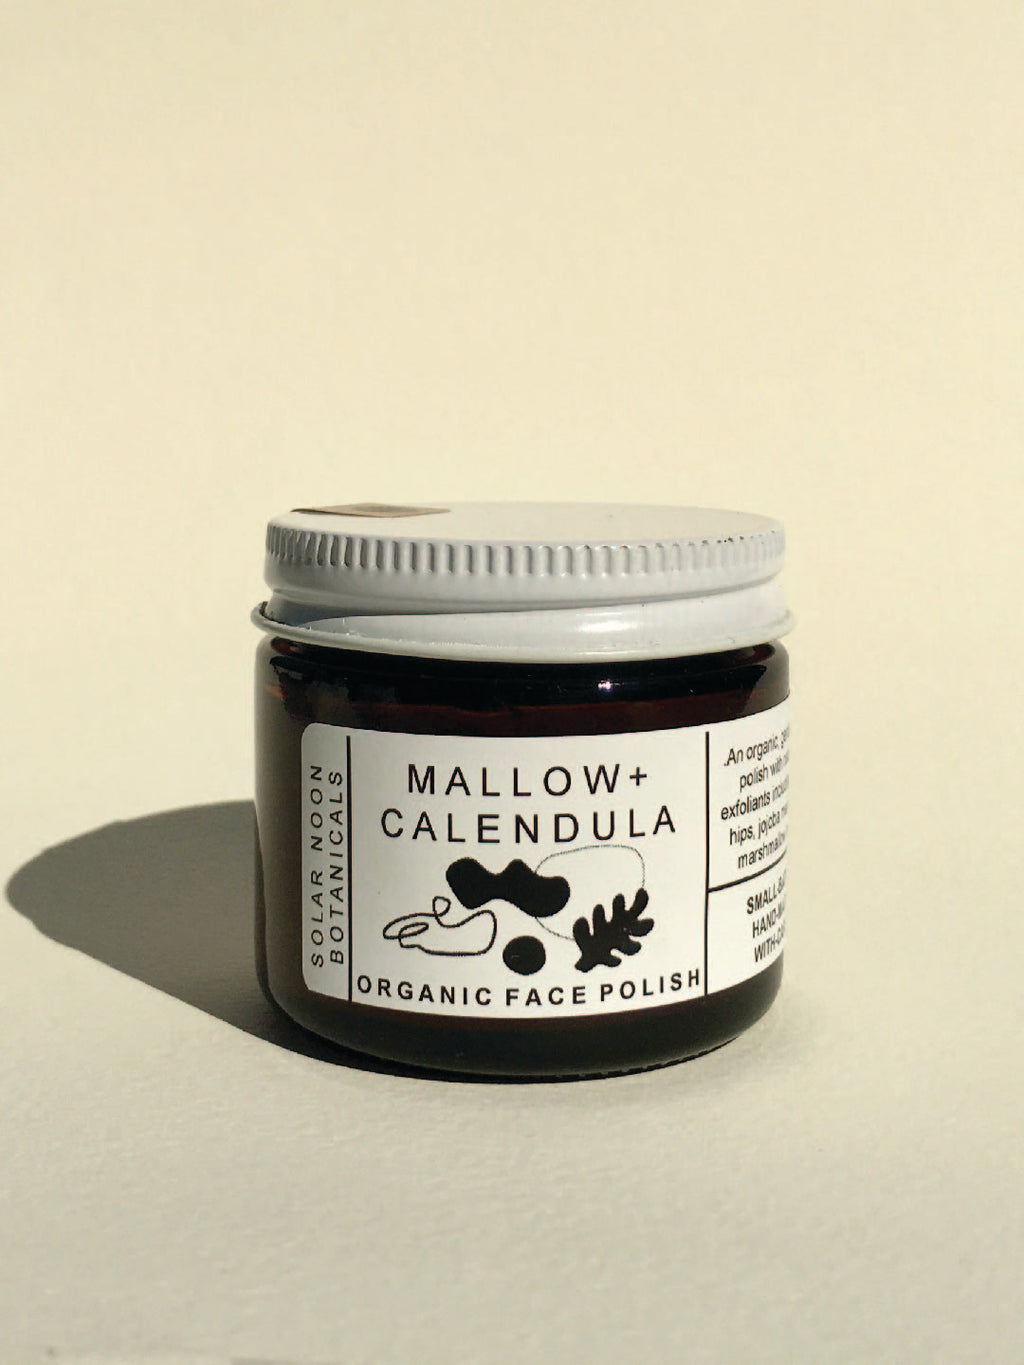 Organic Face Polish Mallow + Calendula by Solar Noon Botanicals